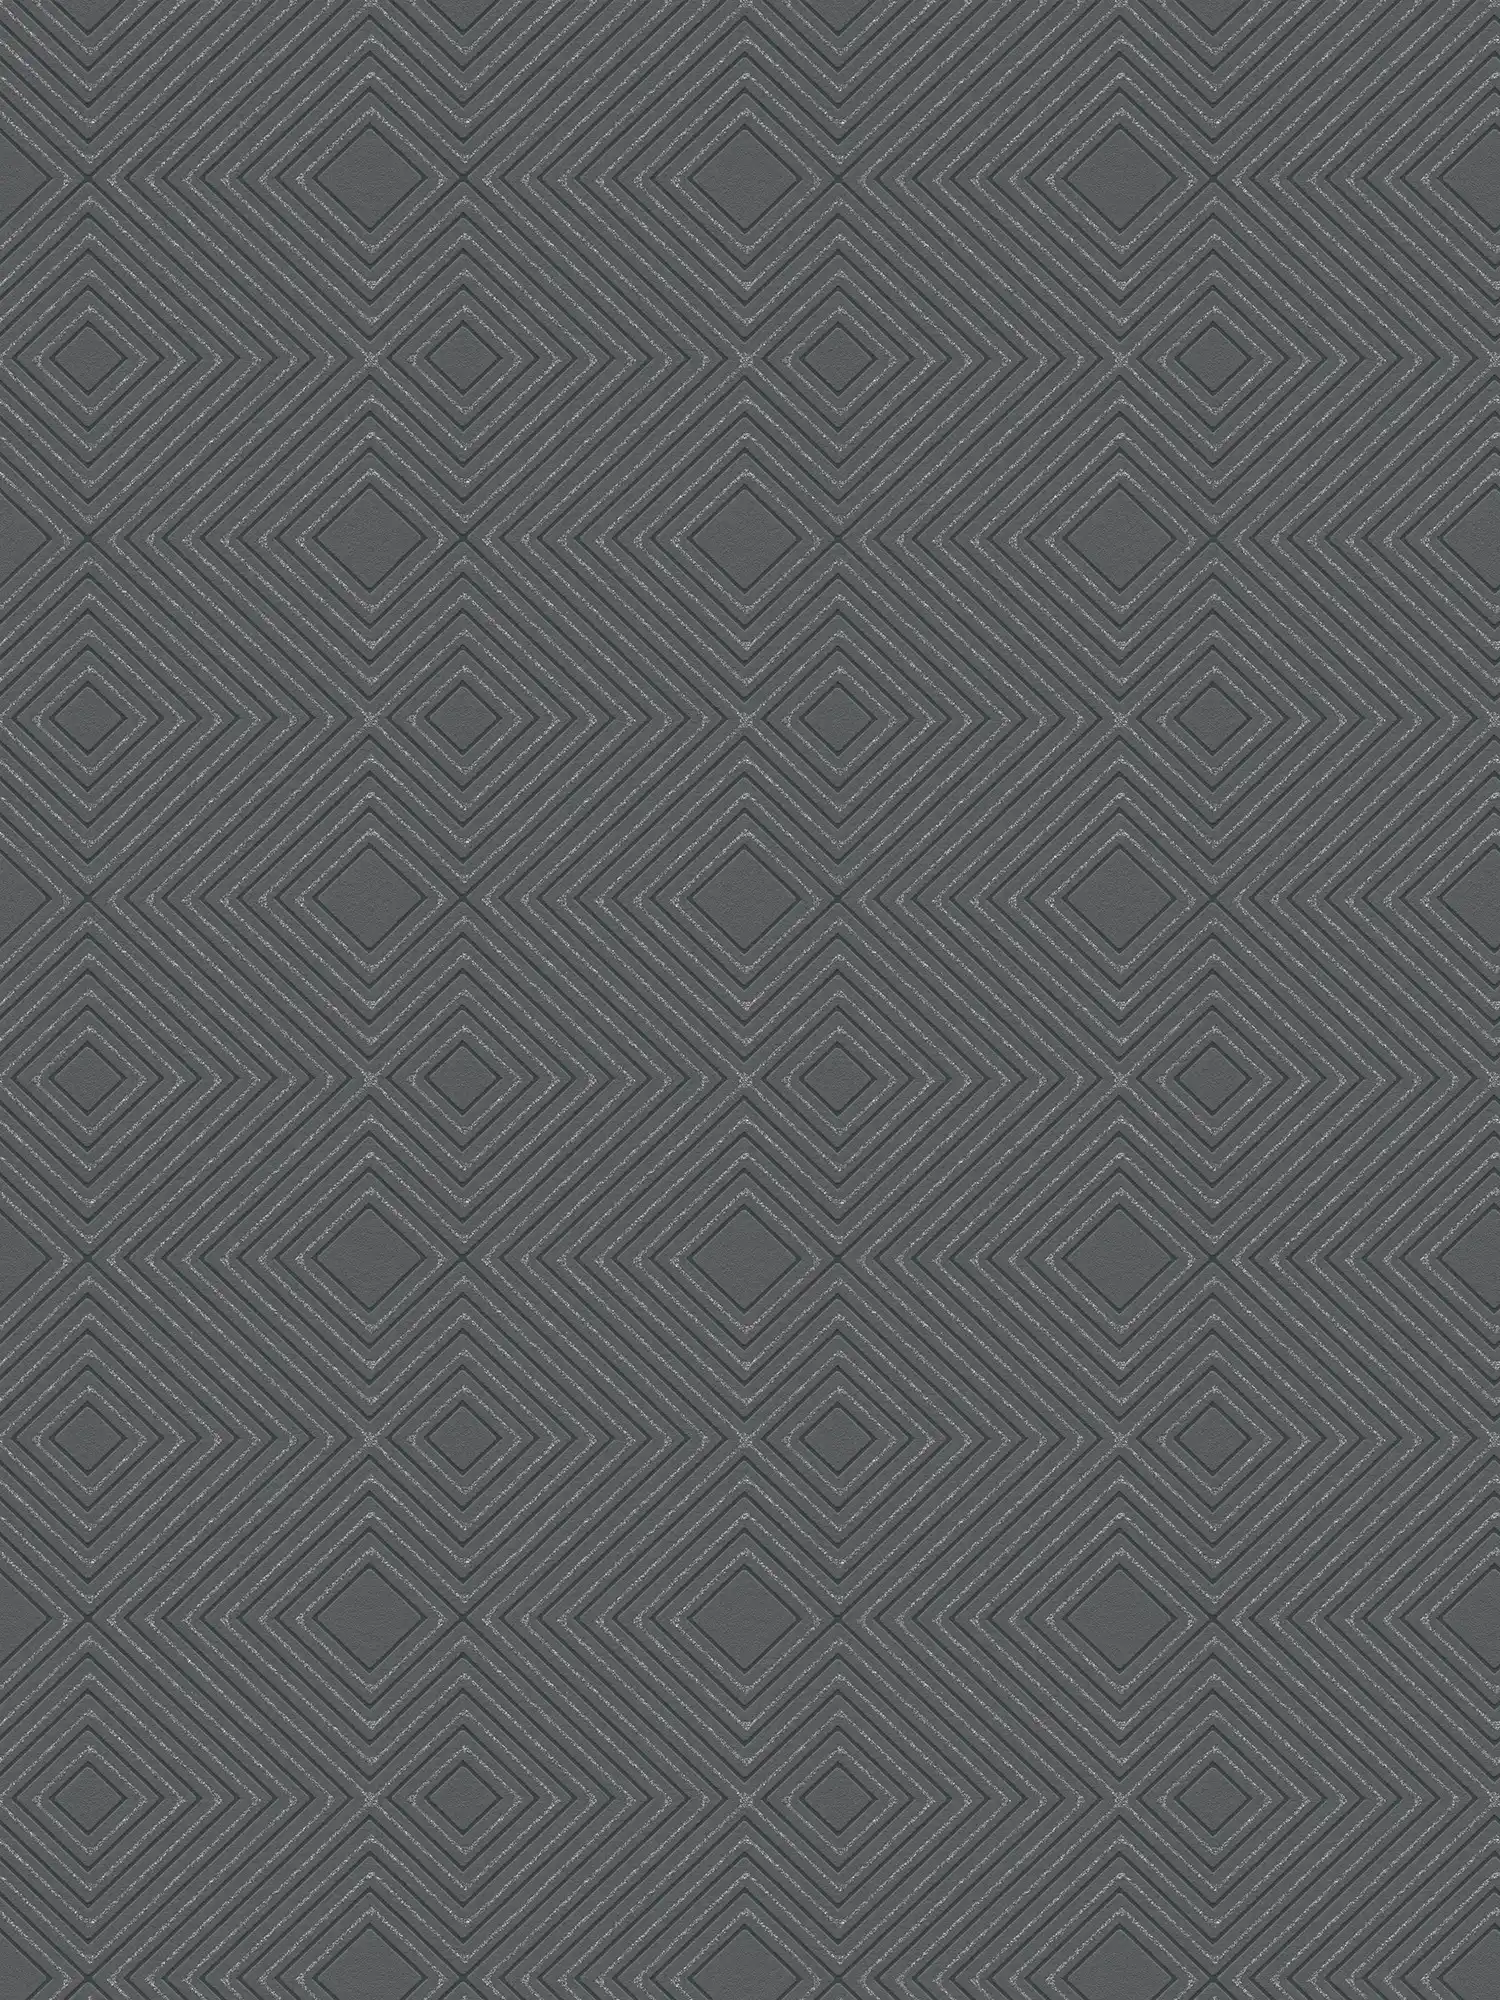 Geometric pattern wallpaper with metallic glitter - black
